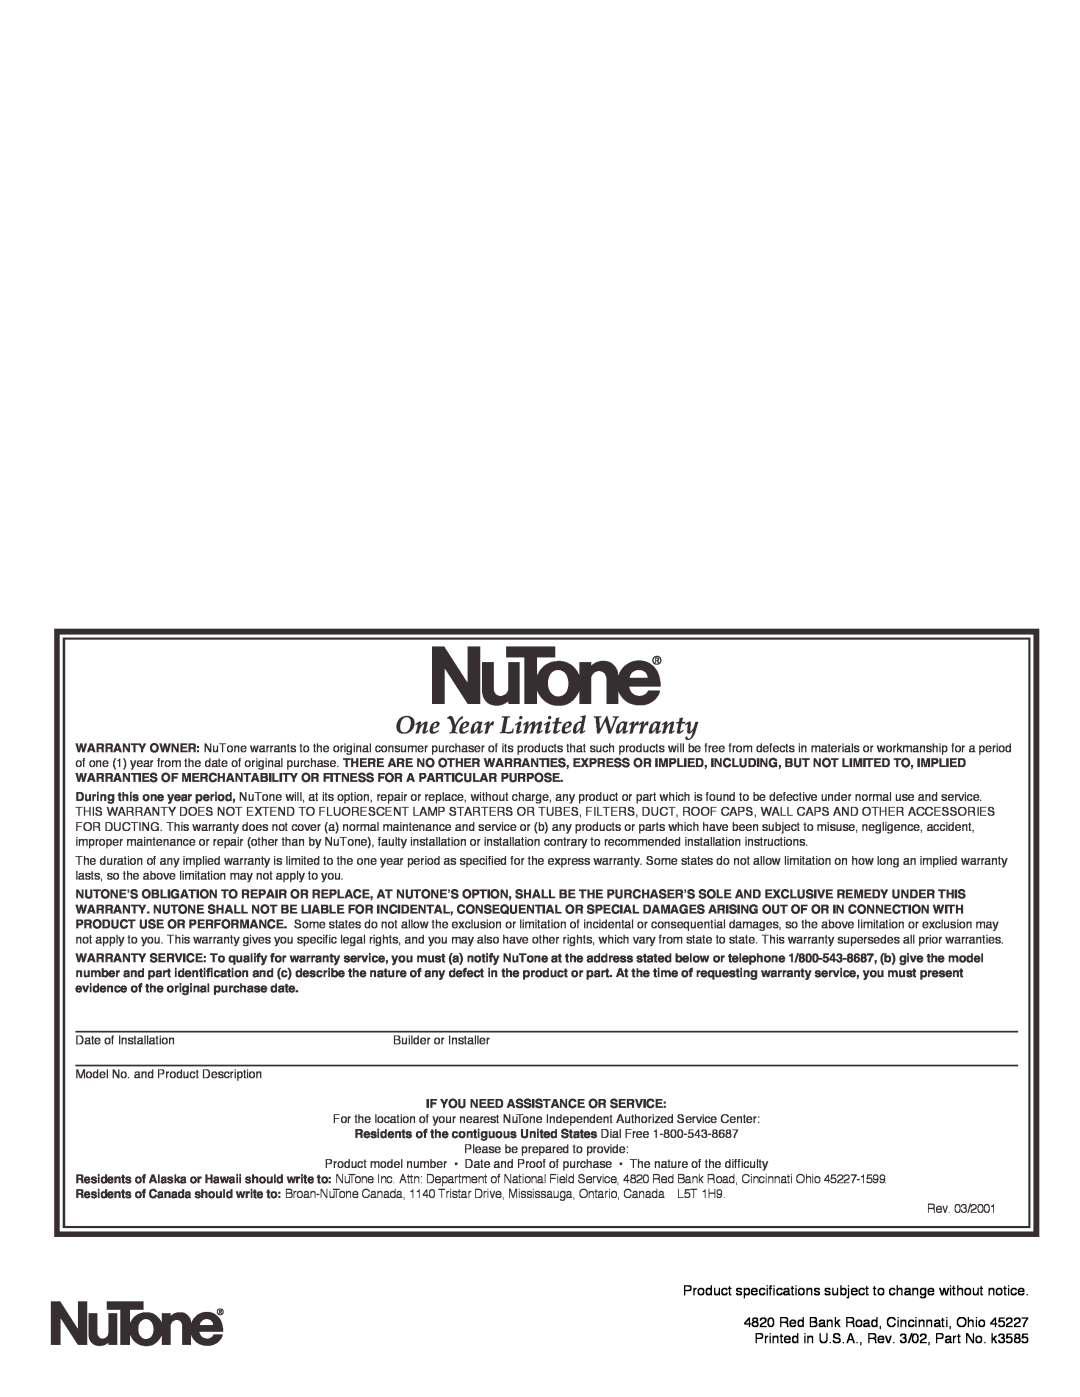 NuTone WHV-30BD & WHV-36BD installation instructions One Year Limited Warranty, Red Bank Road, Cincinnati, Ohio 